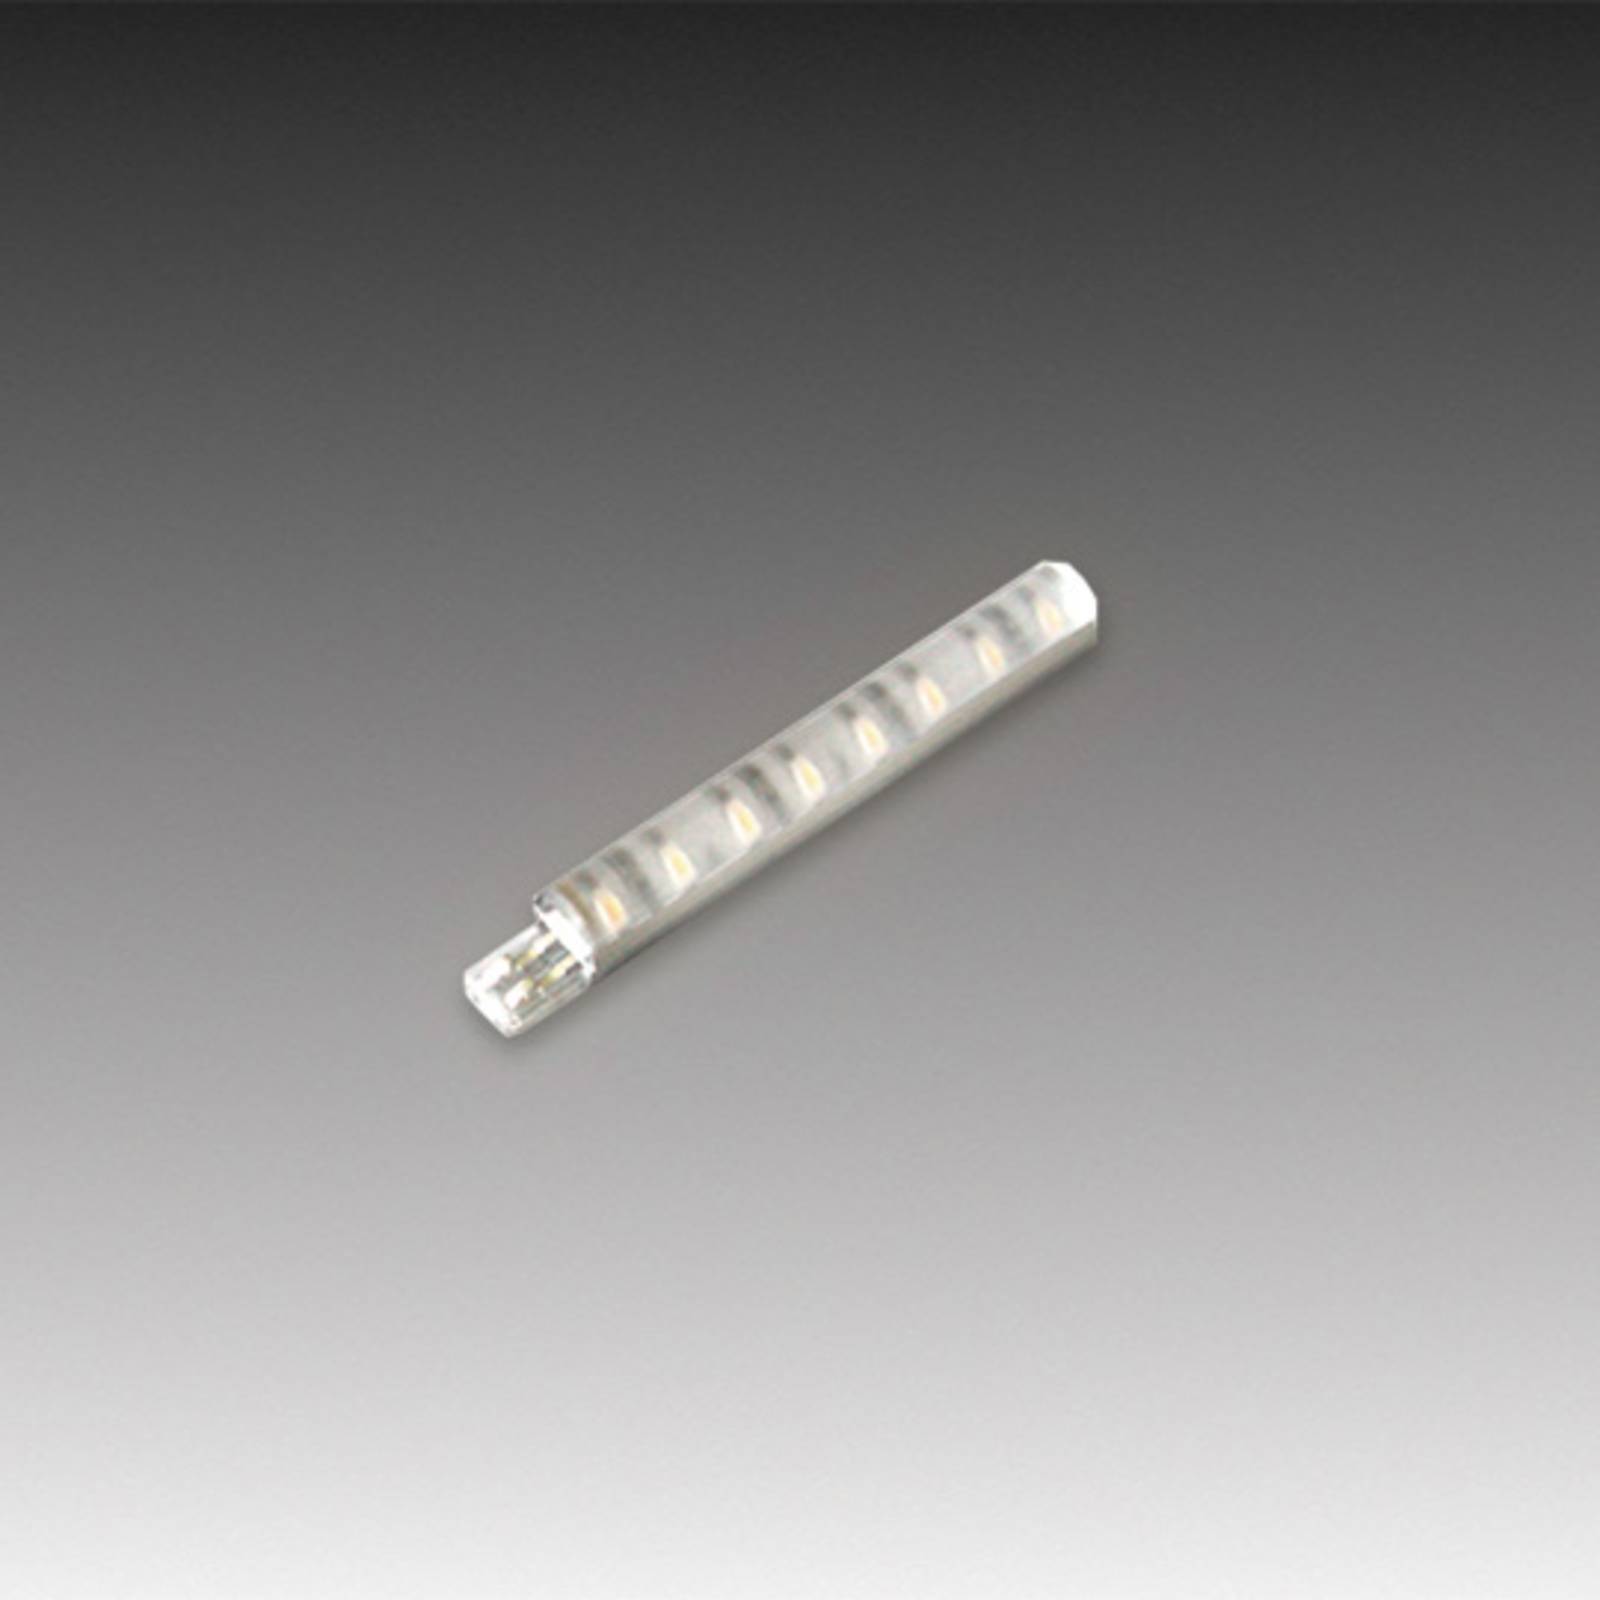 Hera Tige LED Stick 2 pour meuble, 7 cm, blanc chaud